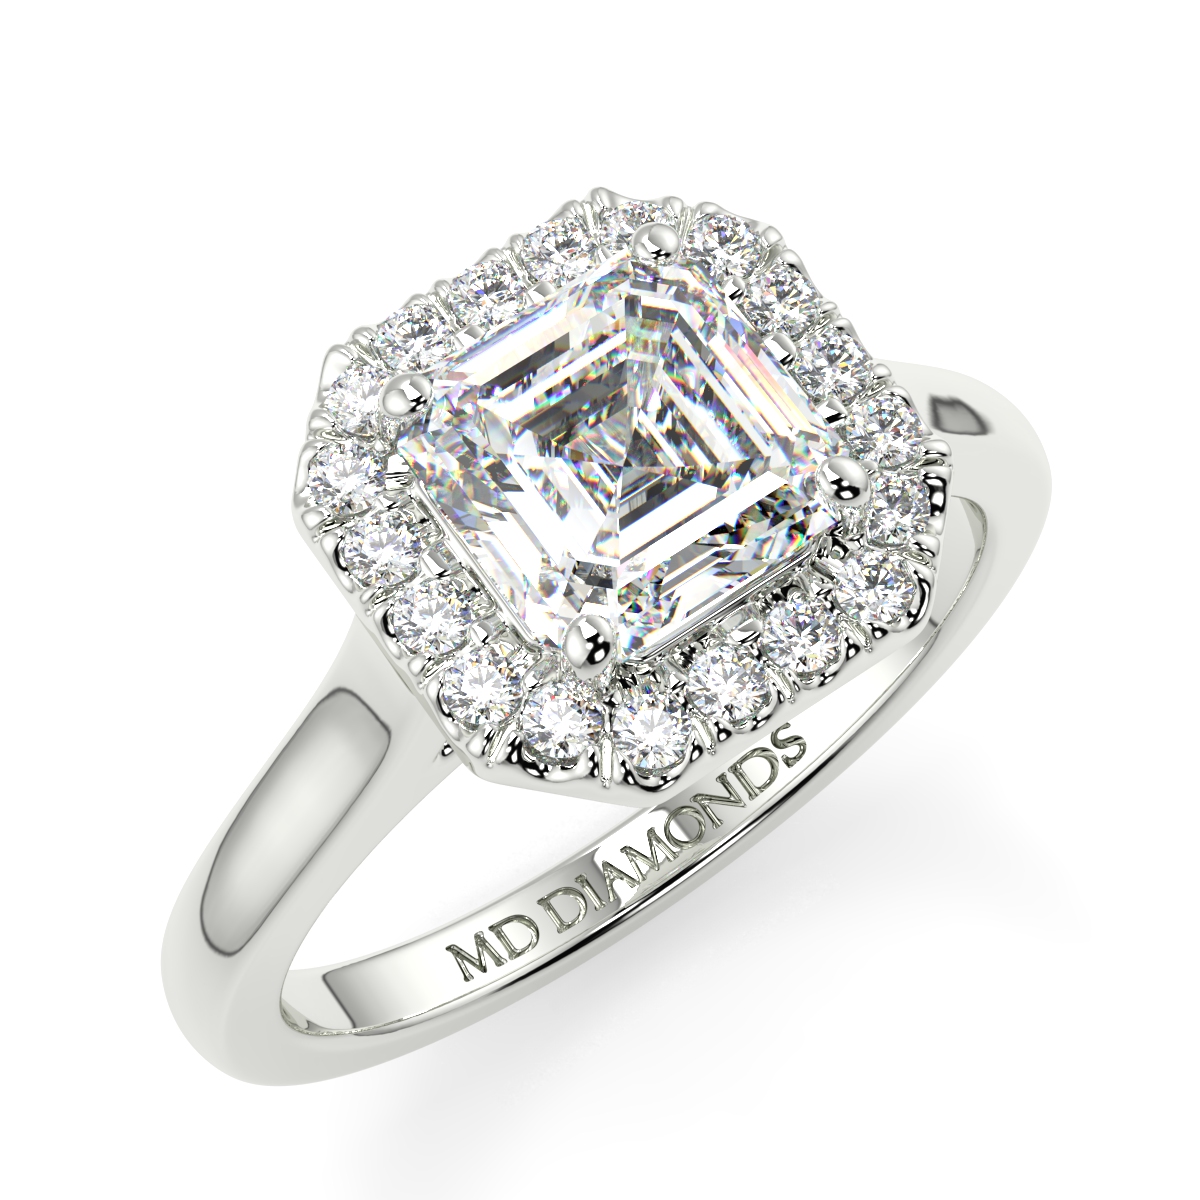 Assher Halo Microset Diamond Ring